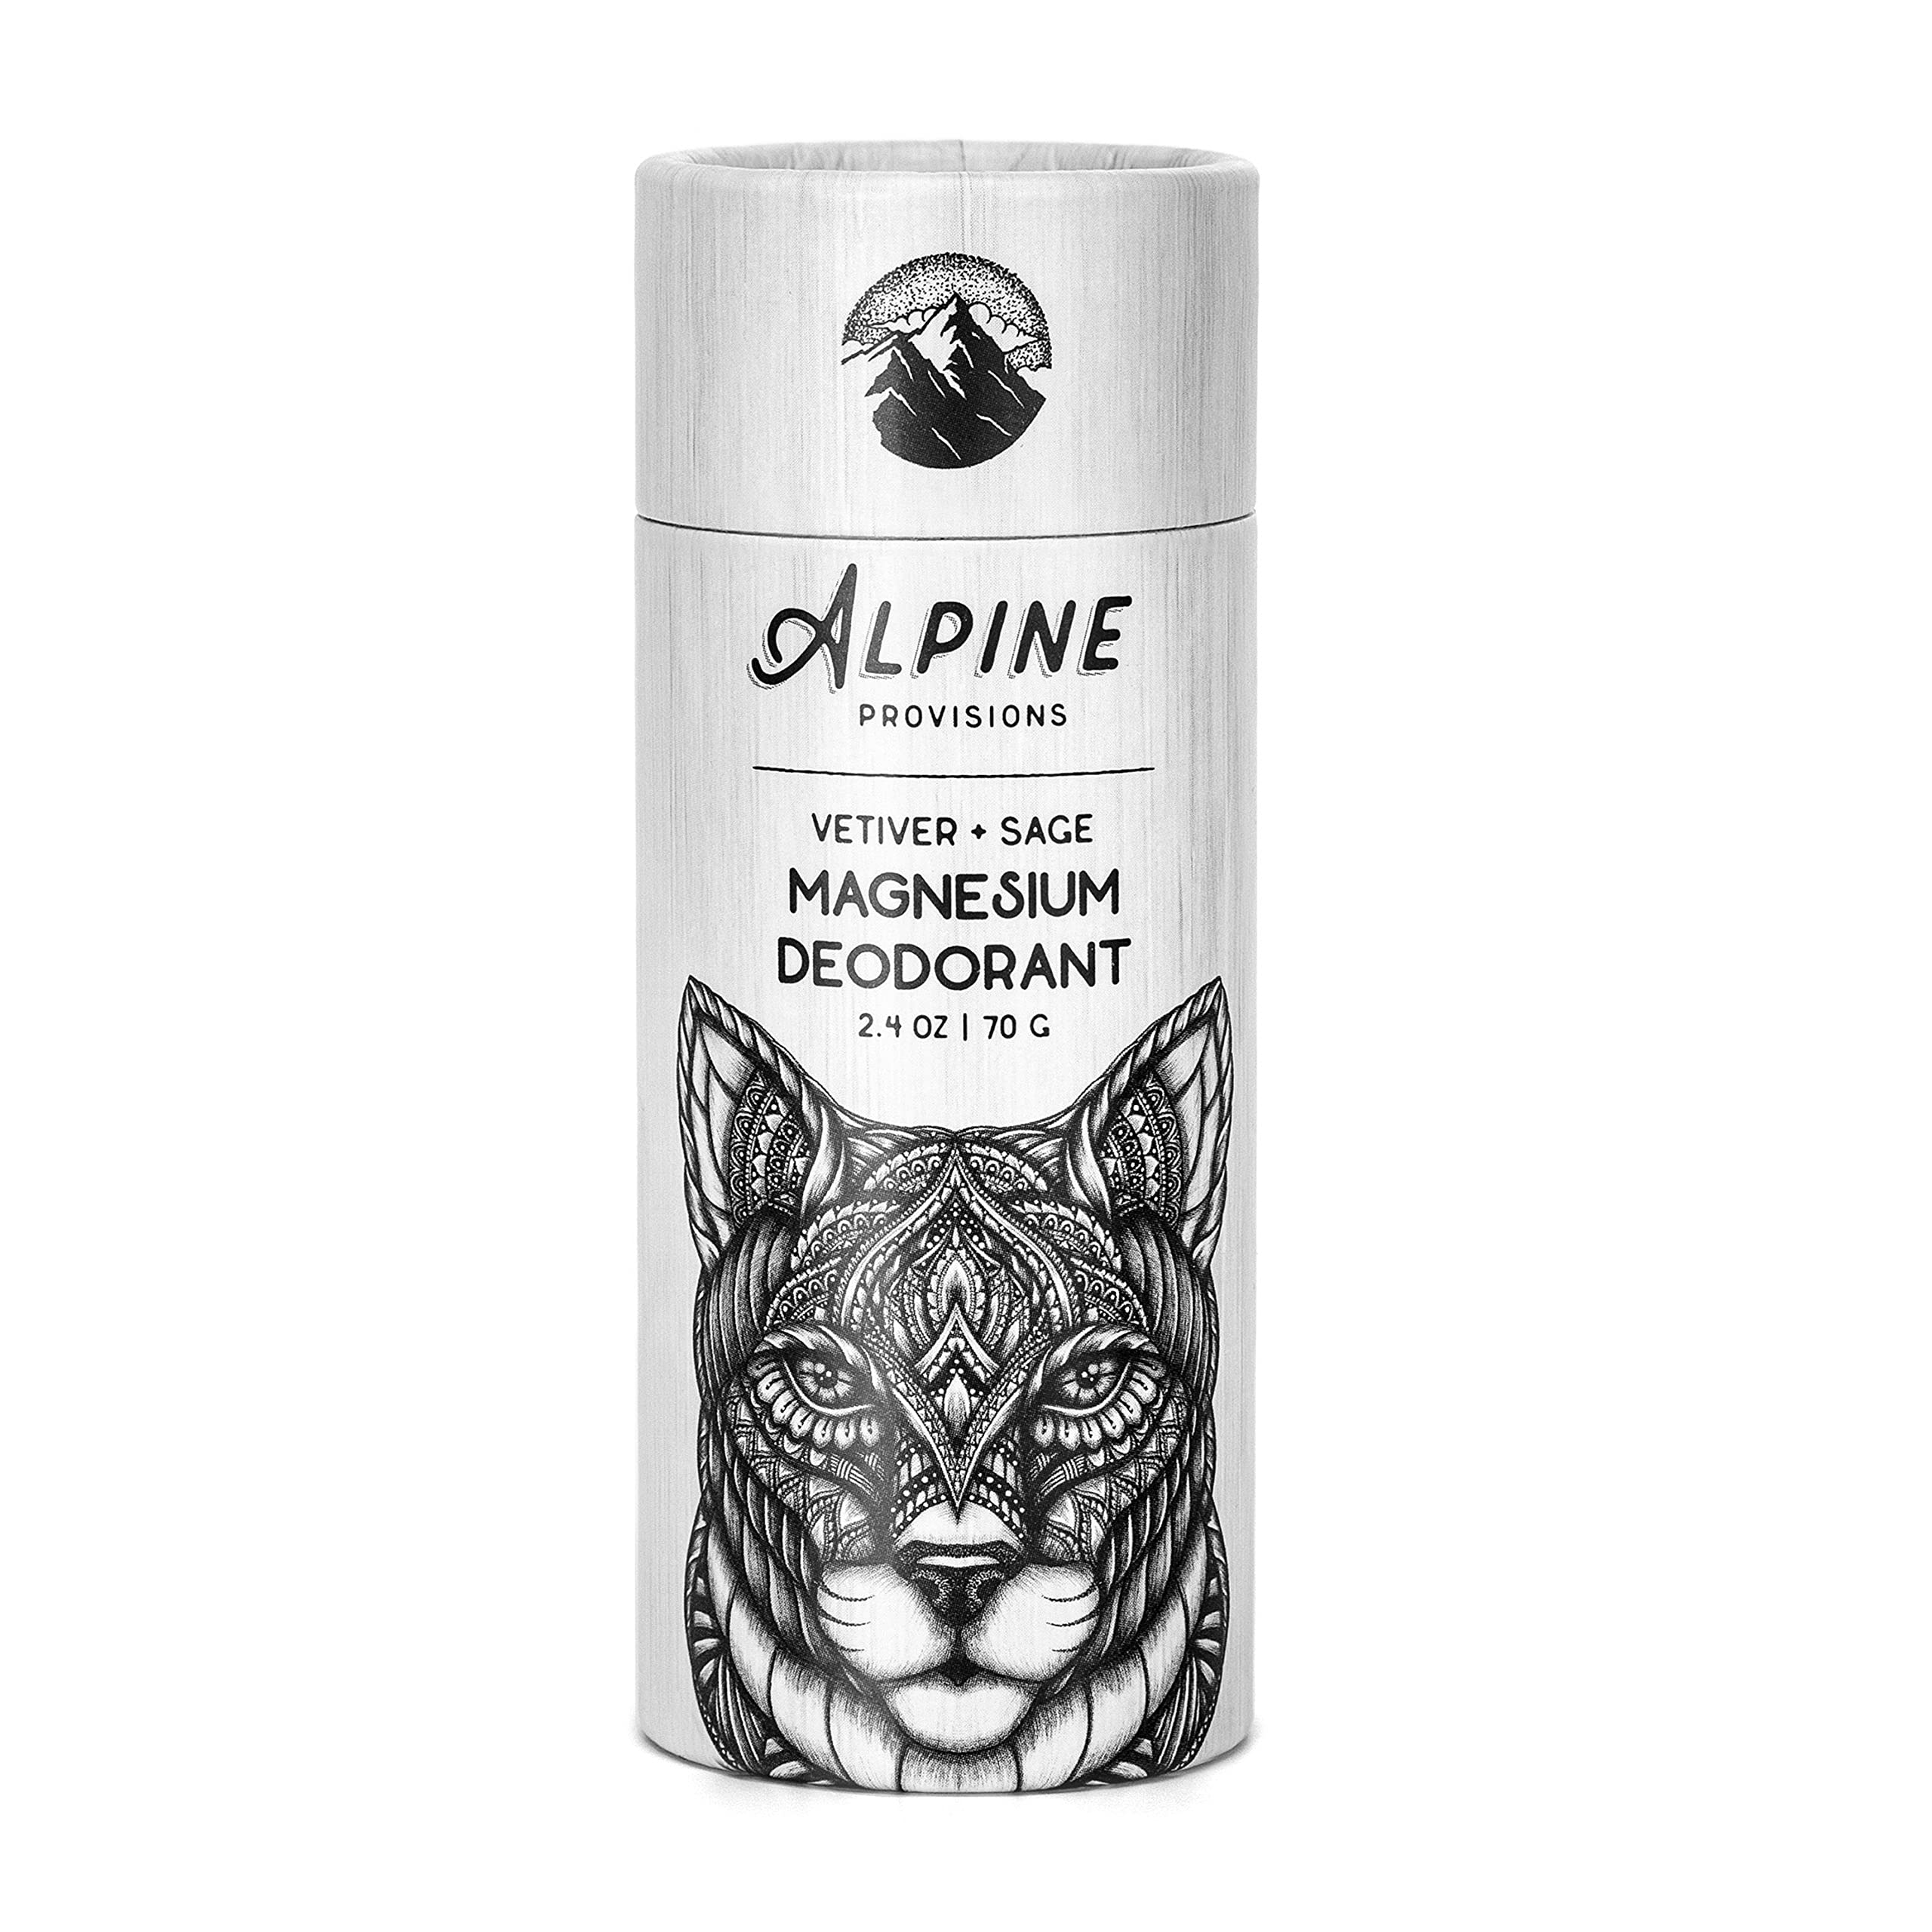 Alpine Sage Deodorant